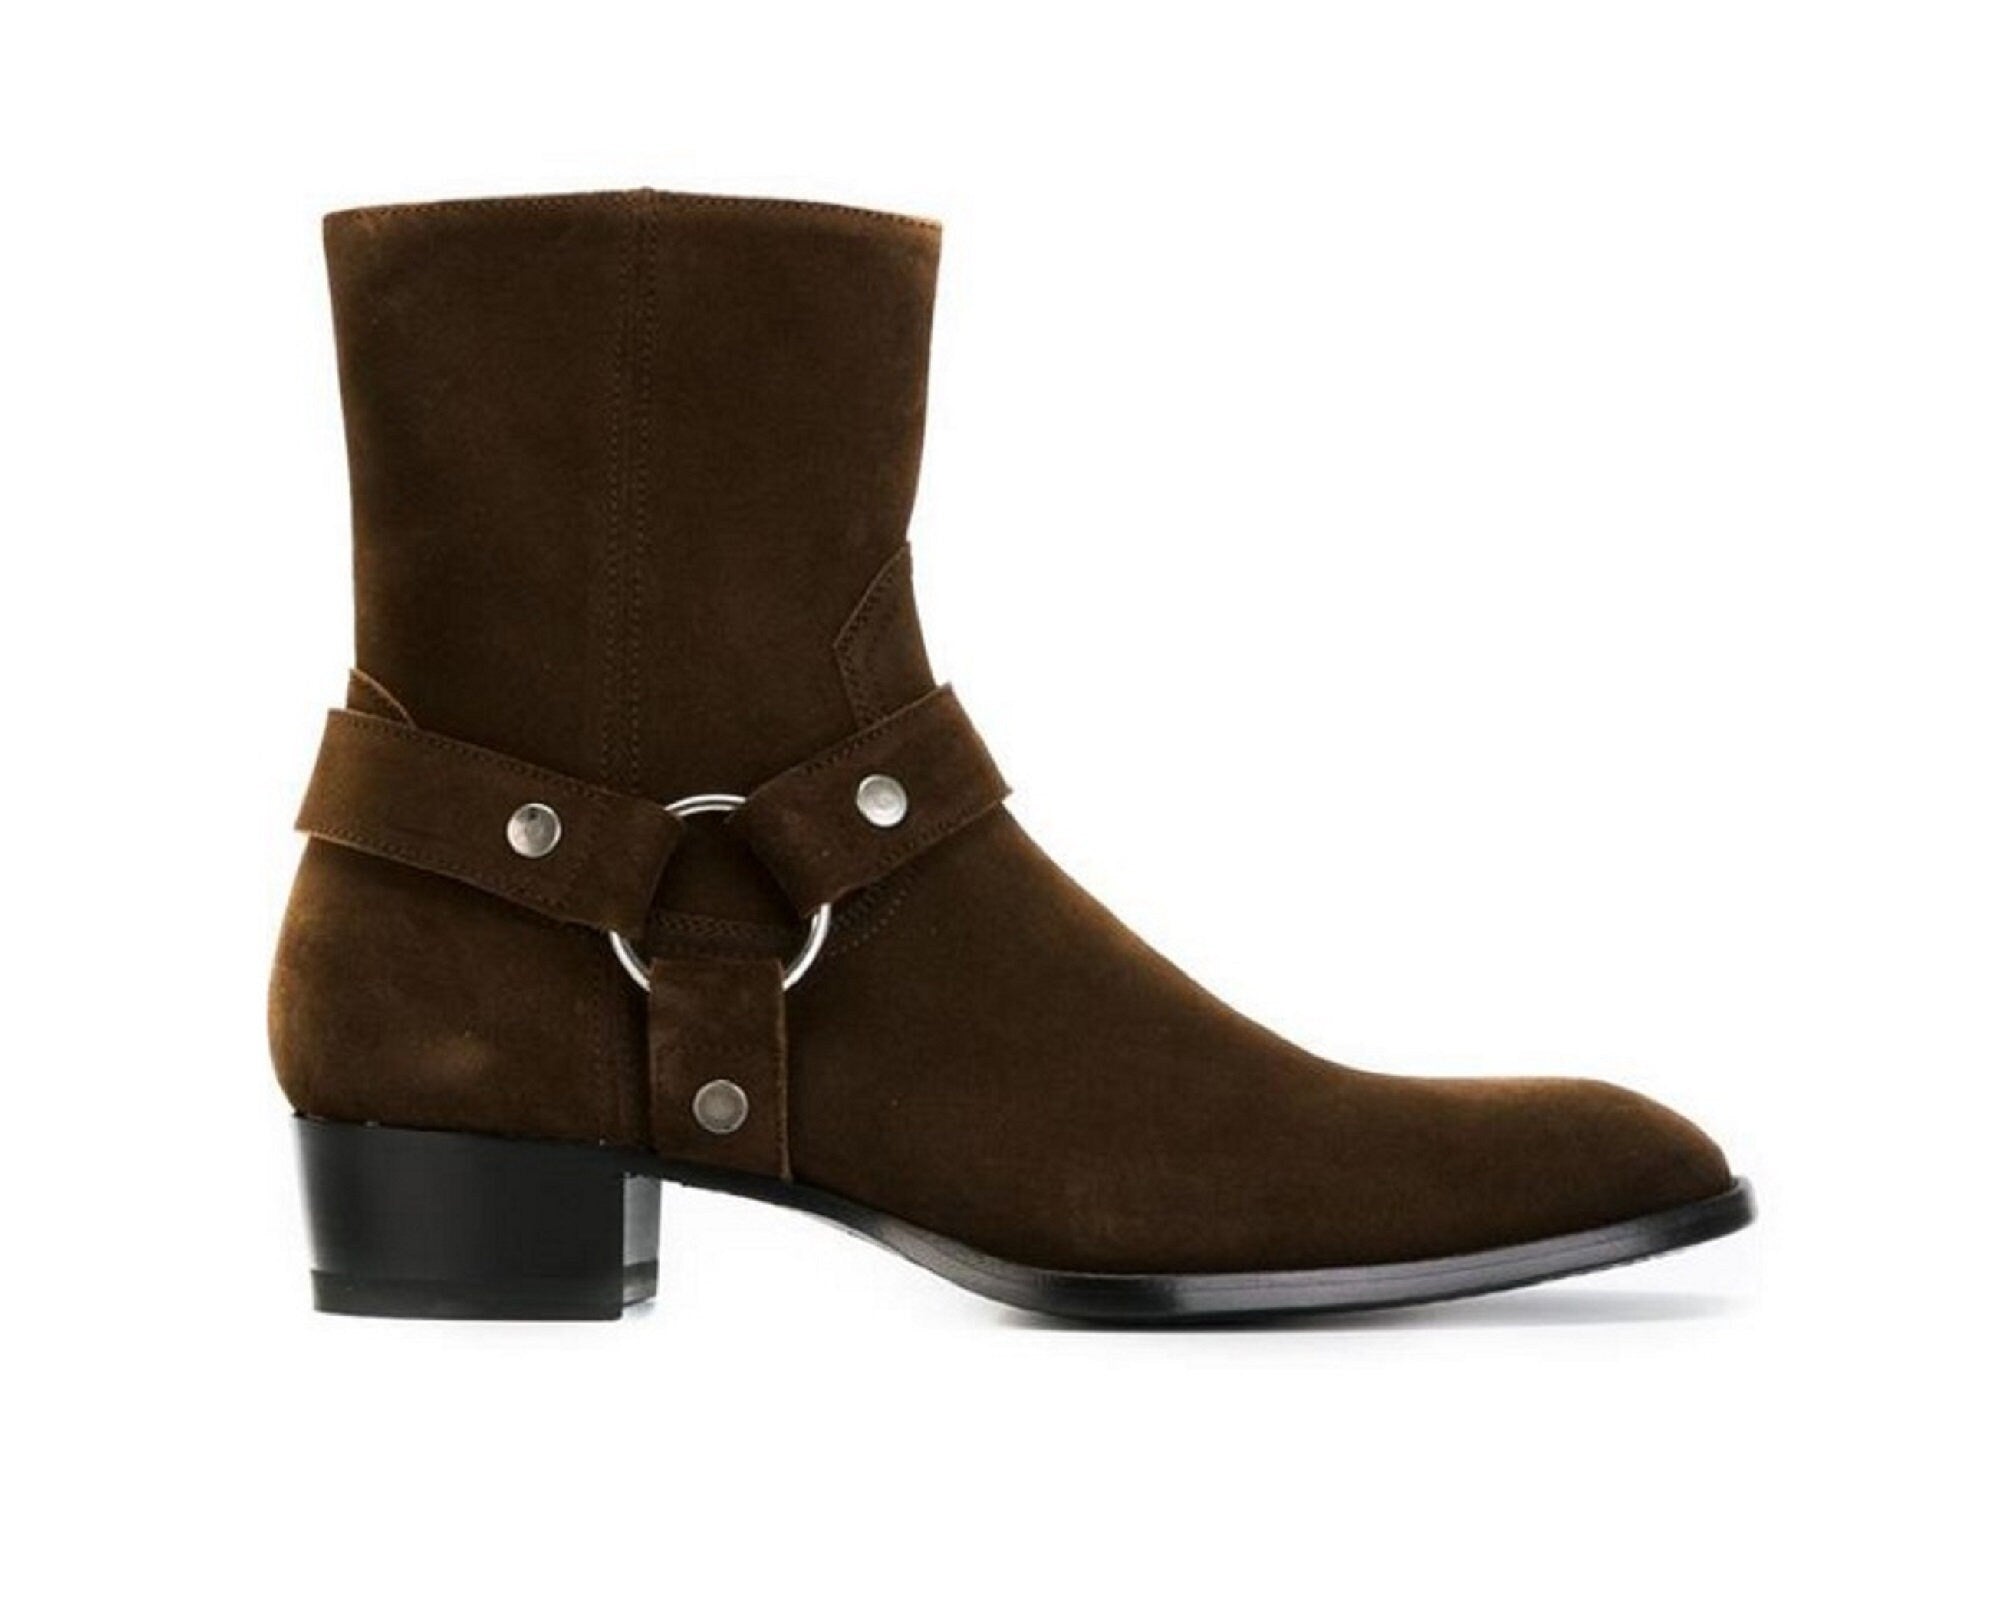 Handmade Men's Jodhpurs Dark Brown Color Suede Shoes, Western Cowboy Zipper Boots Ankle High